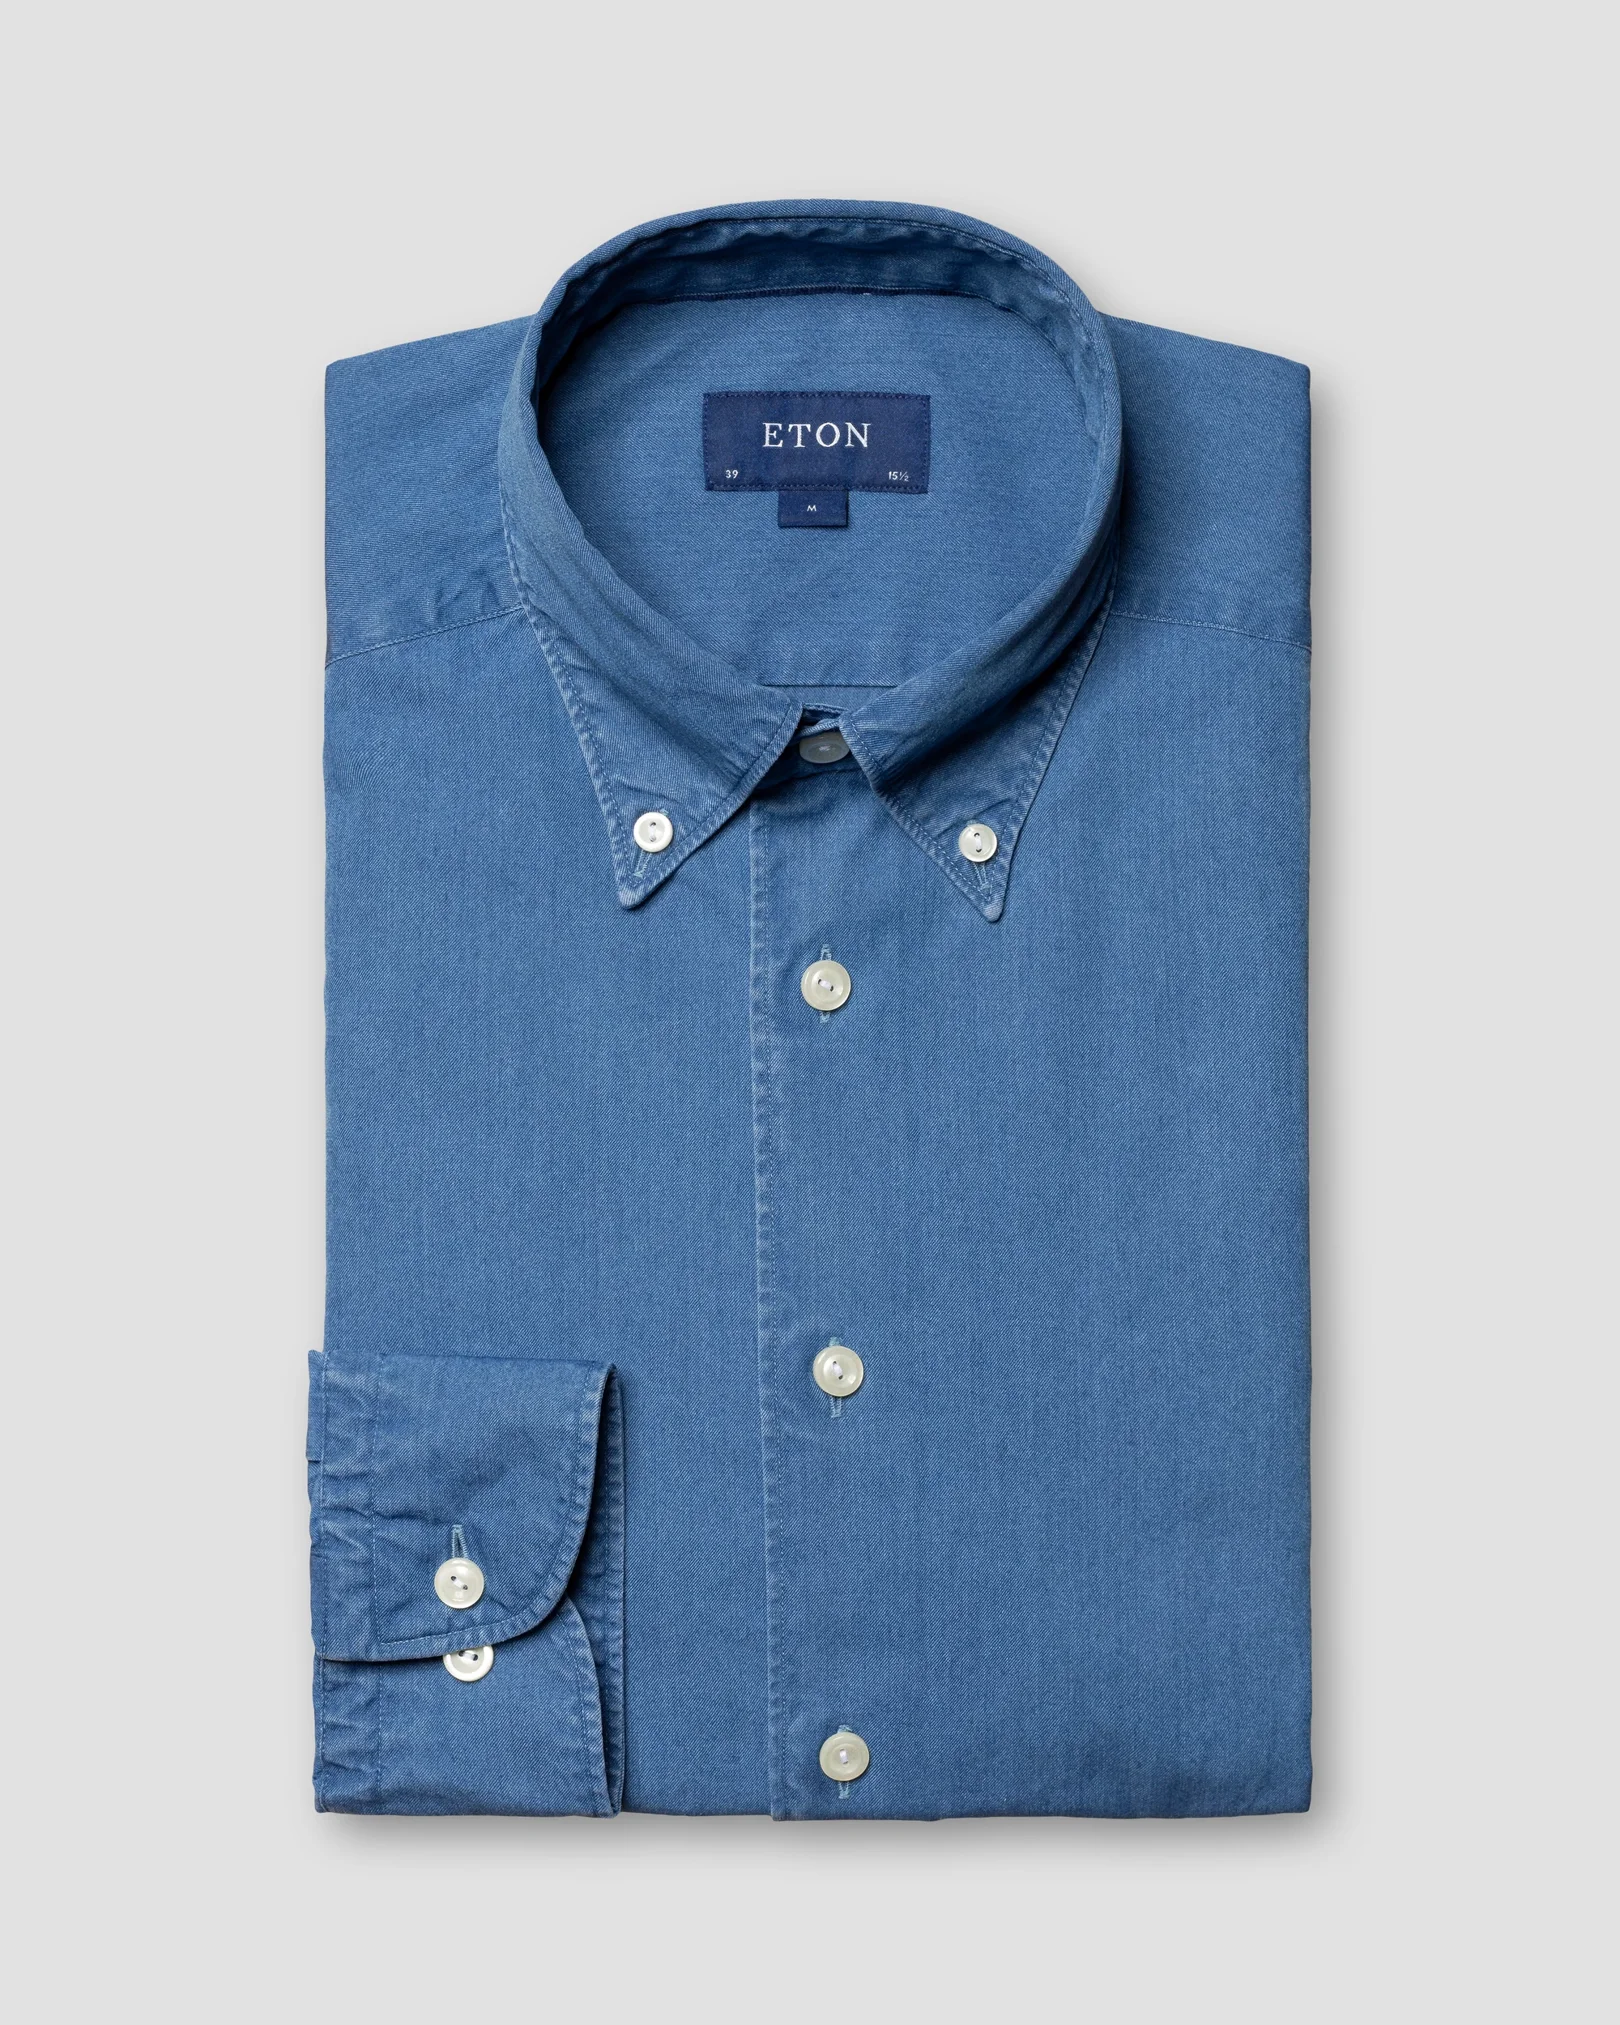 Eton - mid blue lightweight denim shirt button down